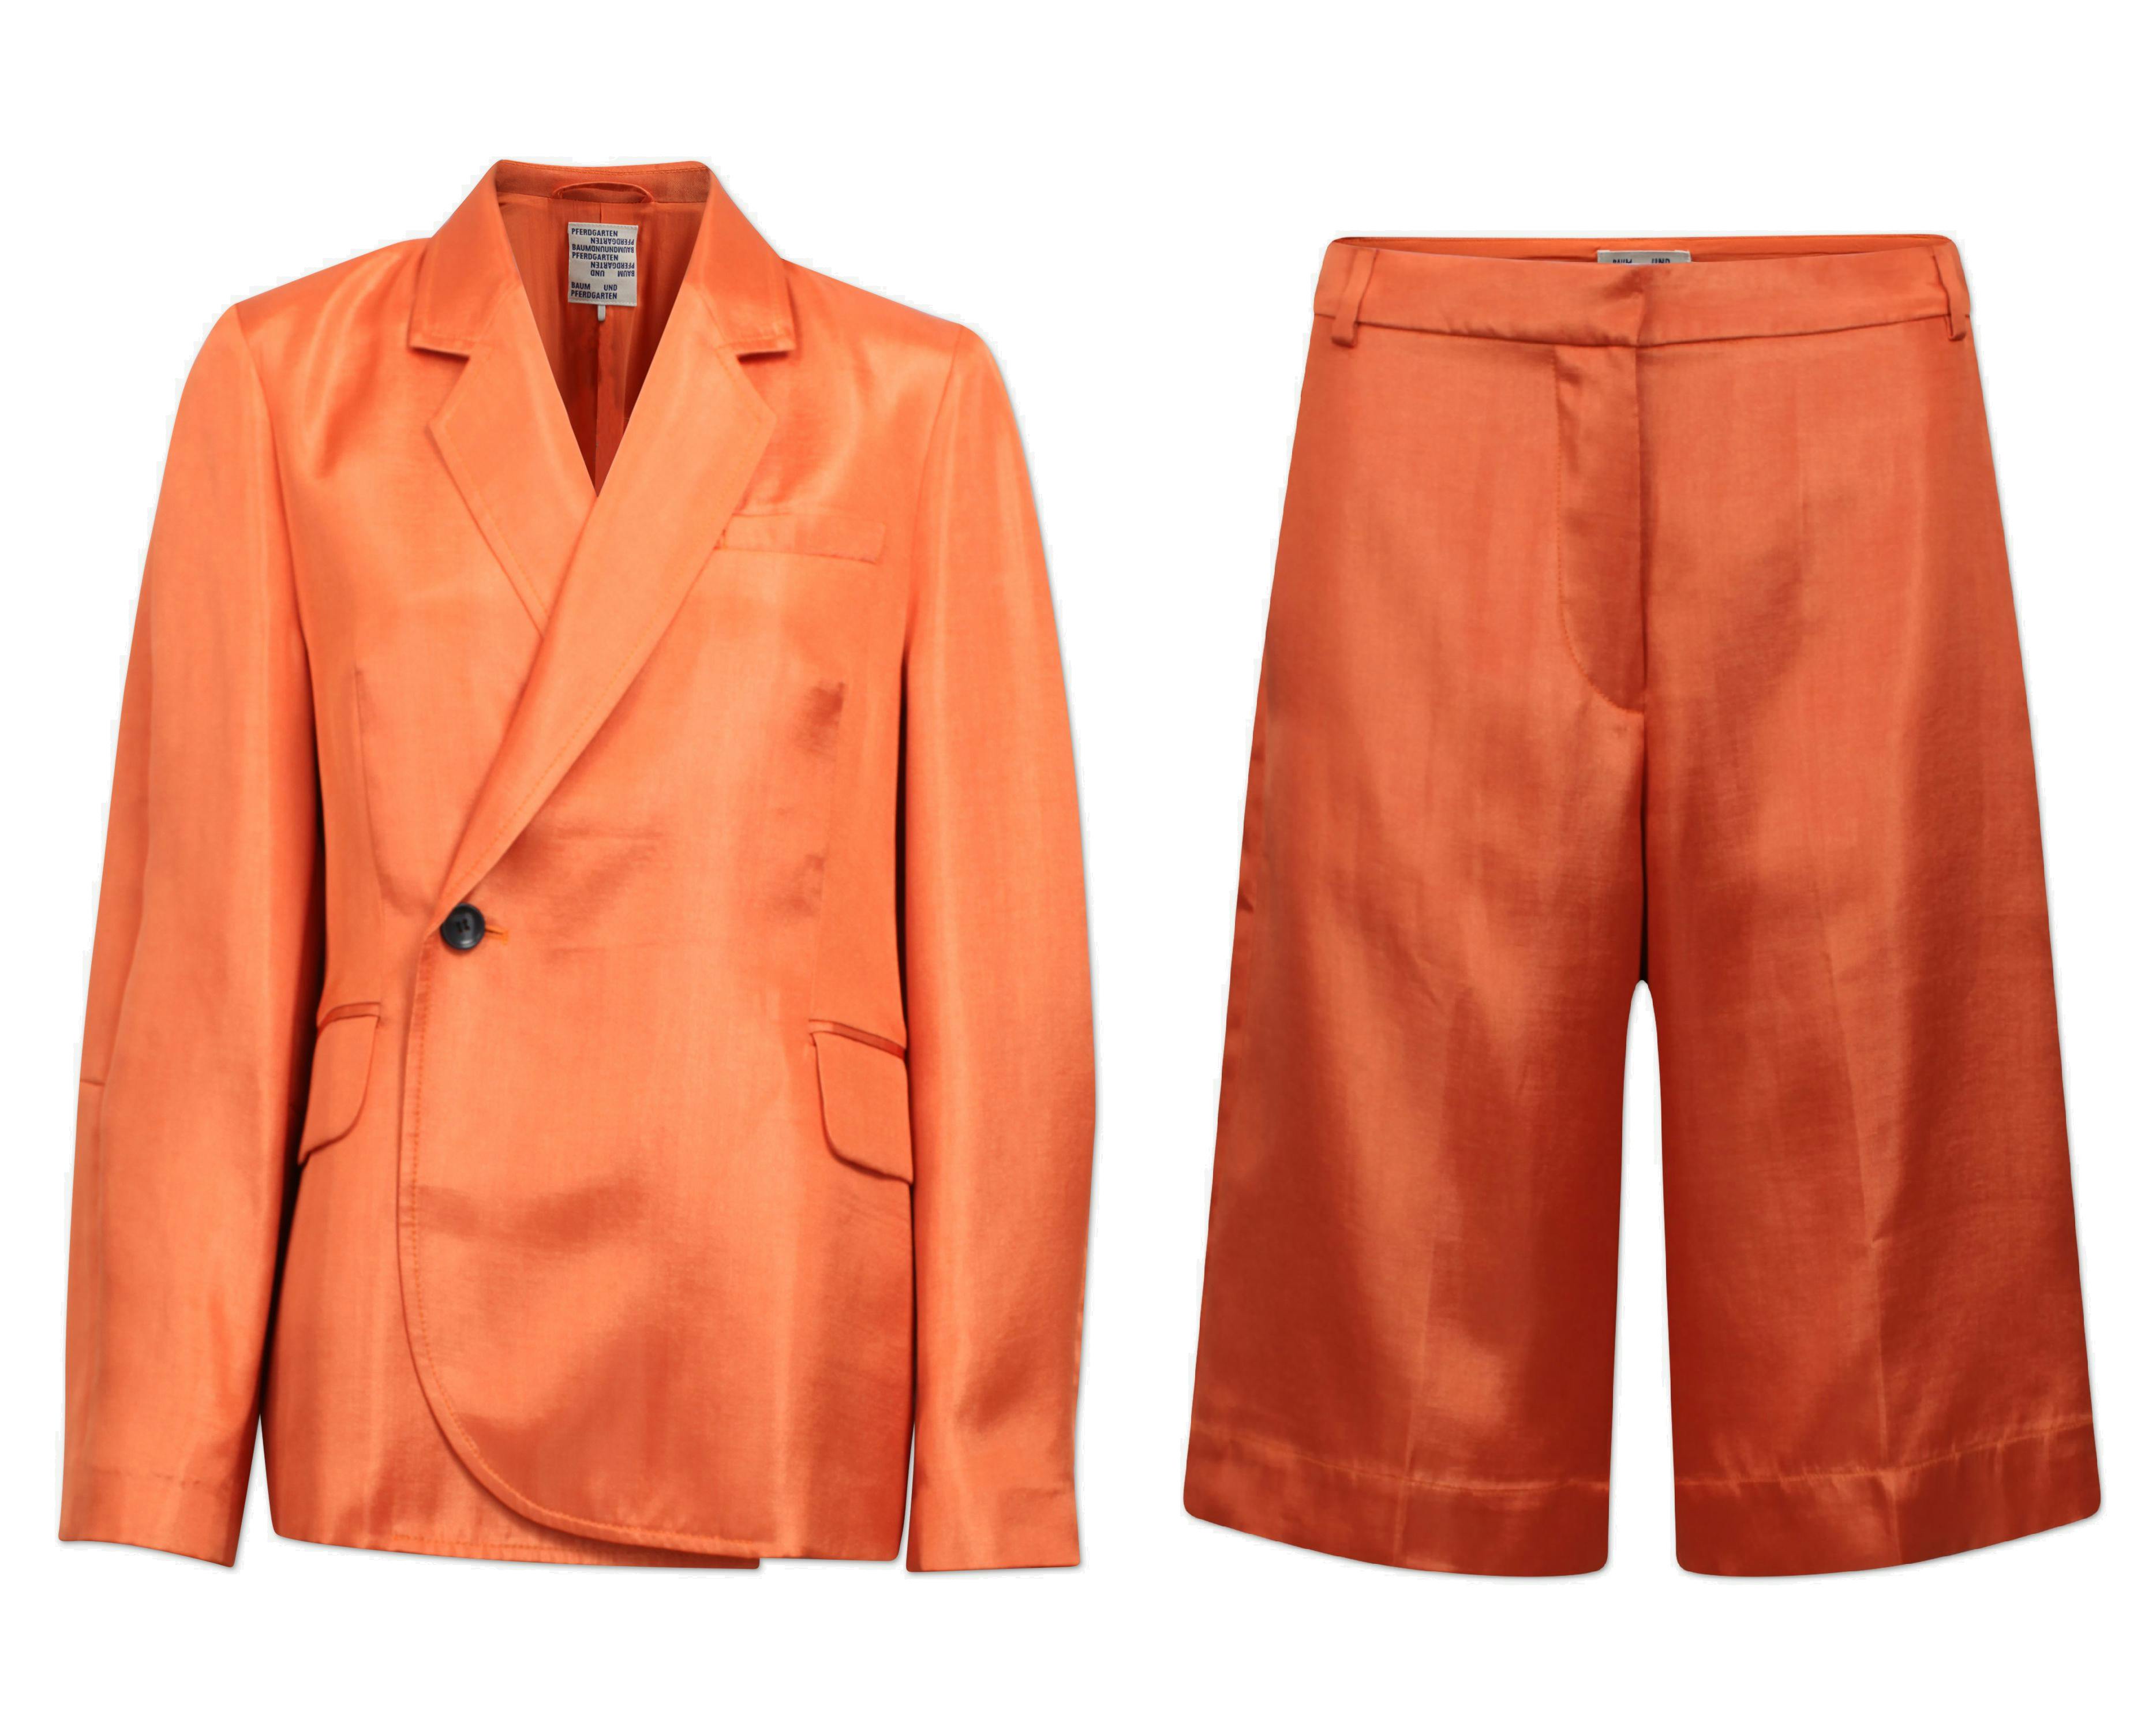 Ensfarvet jakkesæt til sommeren 2020